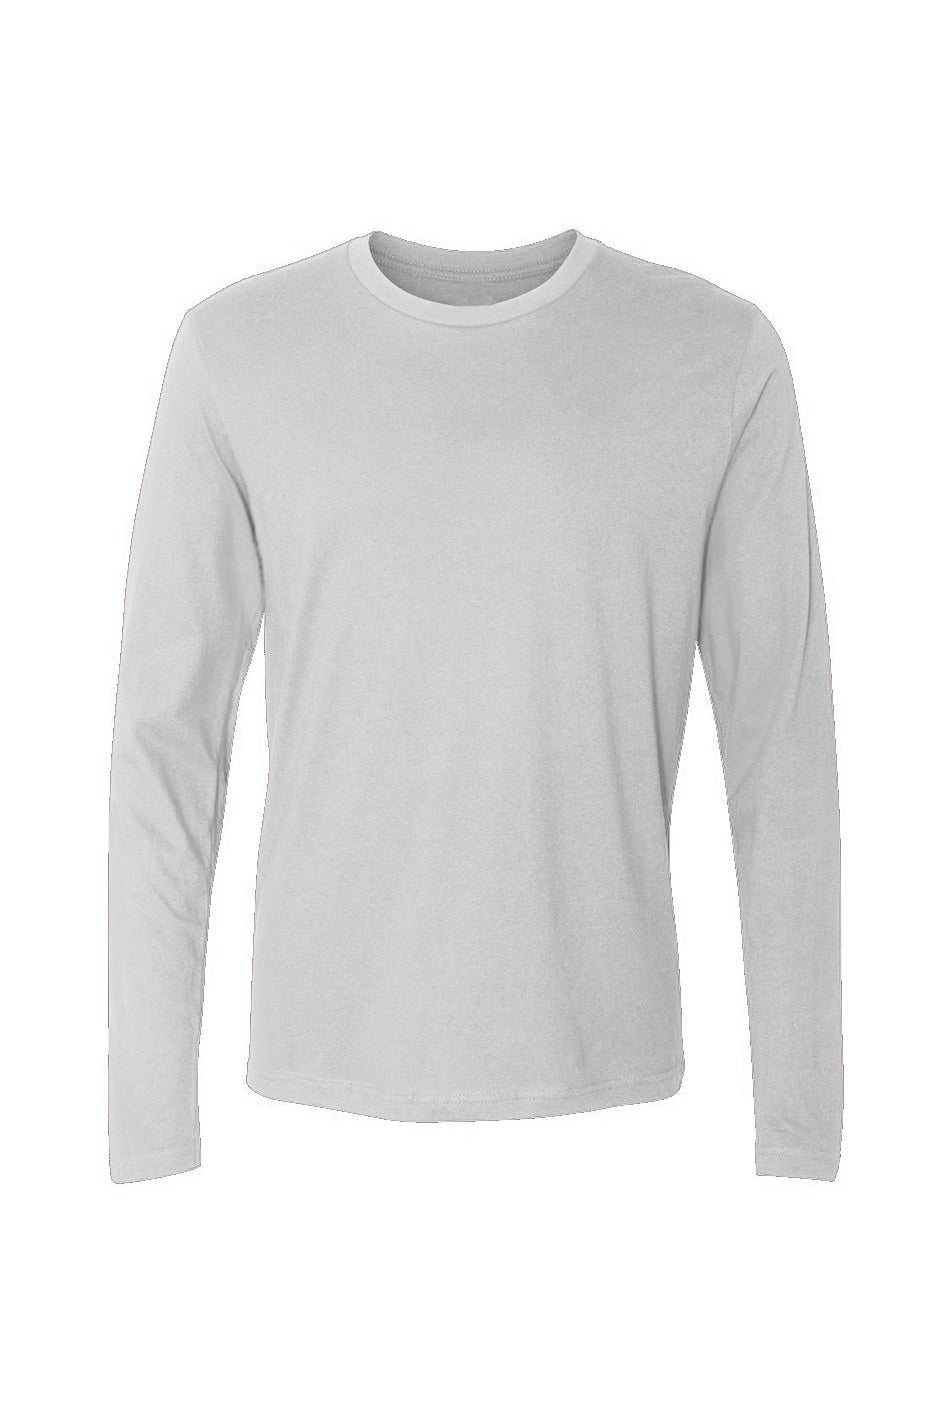 Men's White Cotton Long-Sleeve Crew - Men's Long Sleeve T-shirt - Apliiq - Men's White Cotton Long-Sleeve Crew - APQ-4584890S5A0 - xs - white - Cotton Long-Sleeve T-shirt - Dragon Foxx™ - Dragon Foxx™ Men's Cotton Long-Sleeve T-Shirt